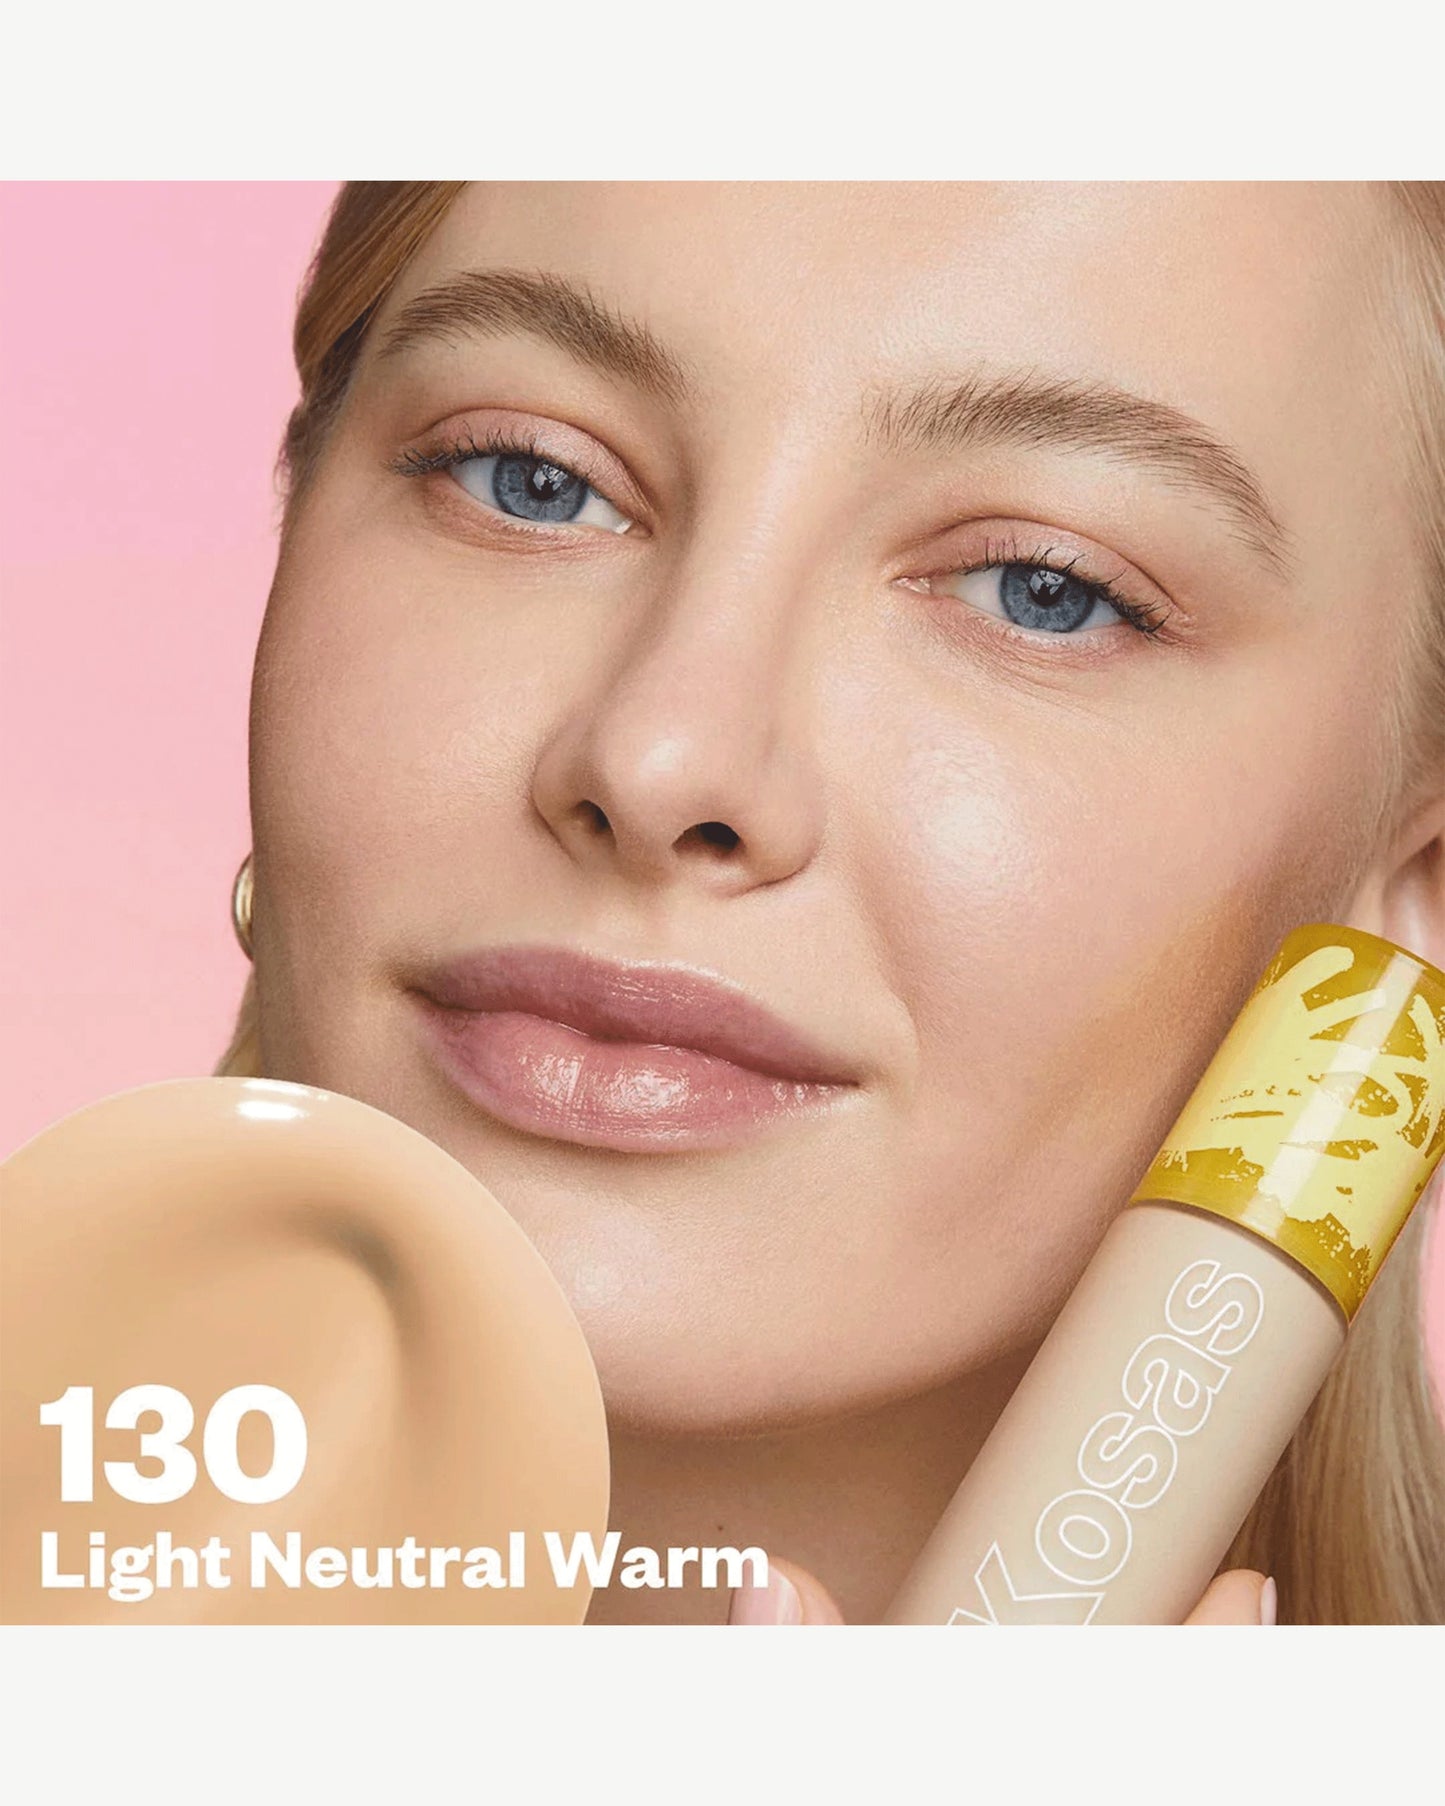  Light Neutral Warm 130 (light with yellow undertones)